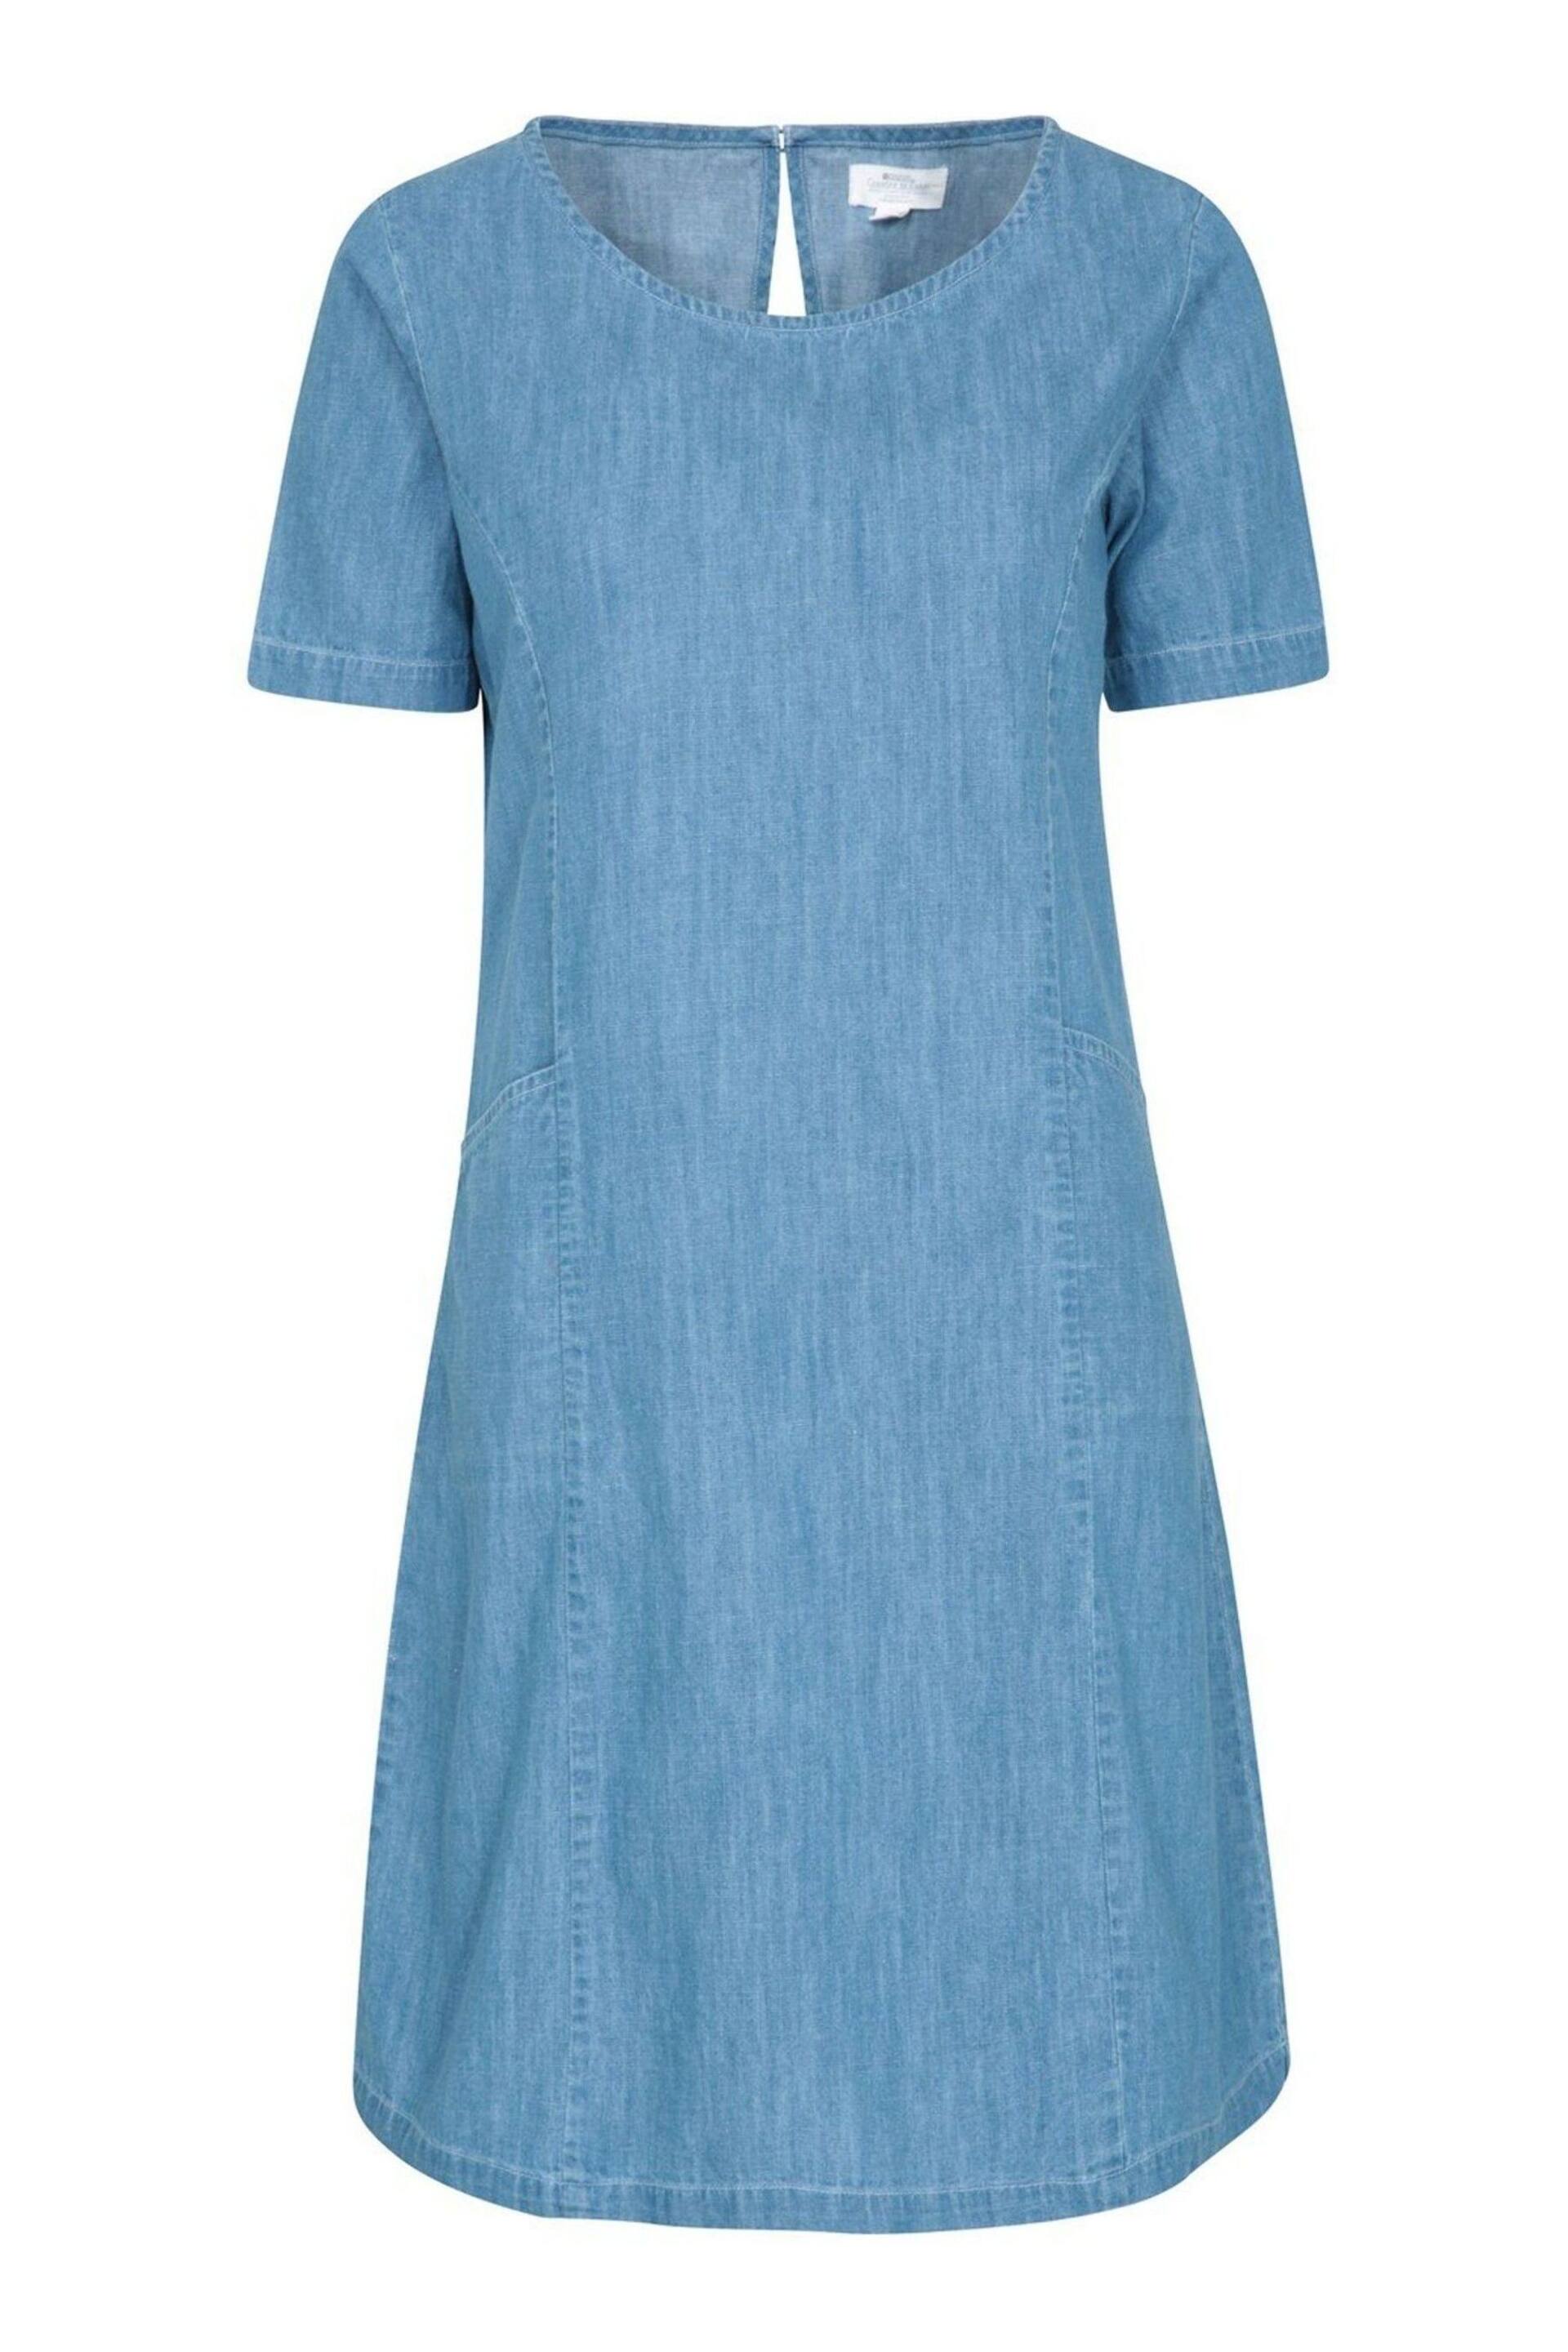 Mountain Warehouse Blue Flora Women UV Protect Cotton Denim Dress - Image 3 of 3